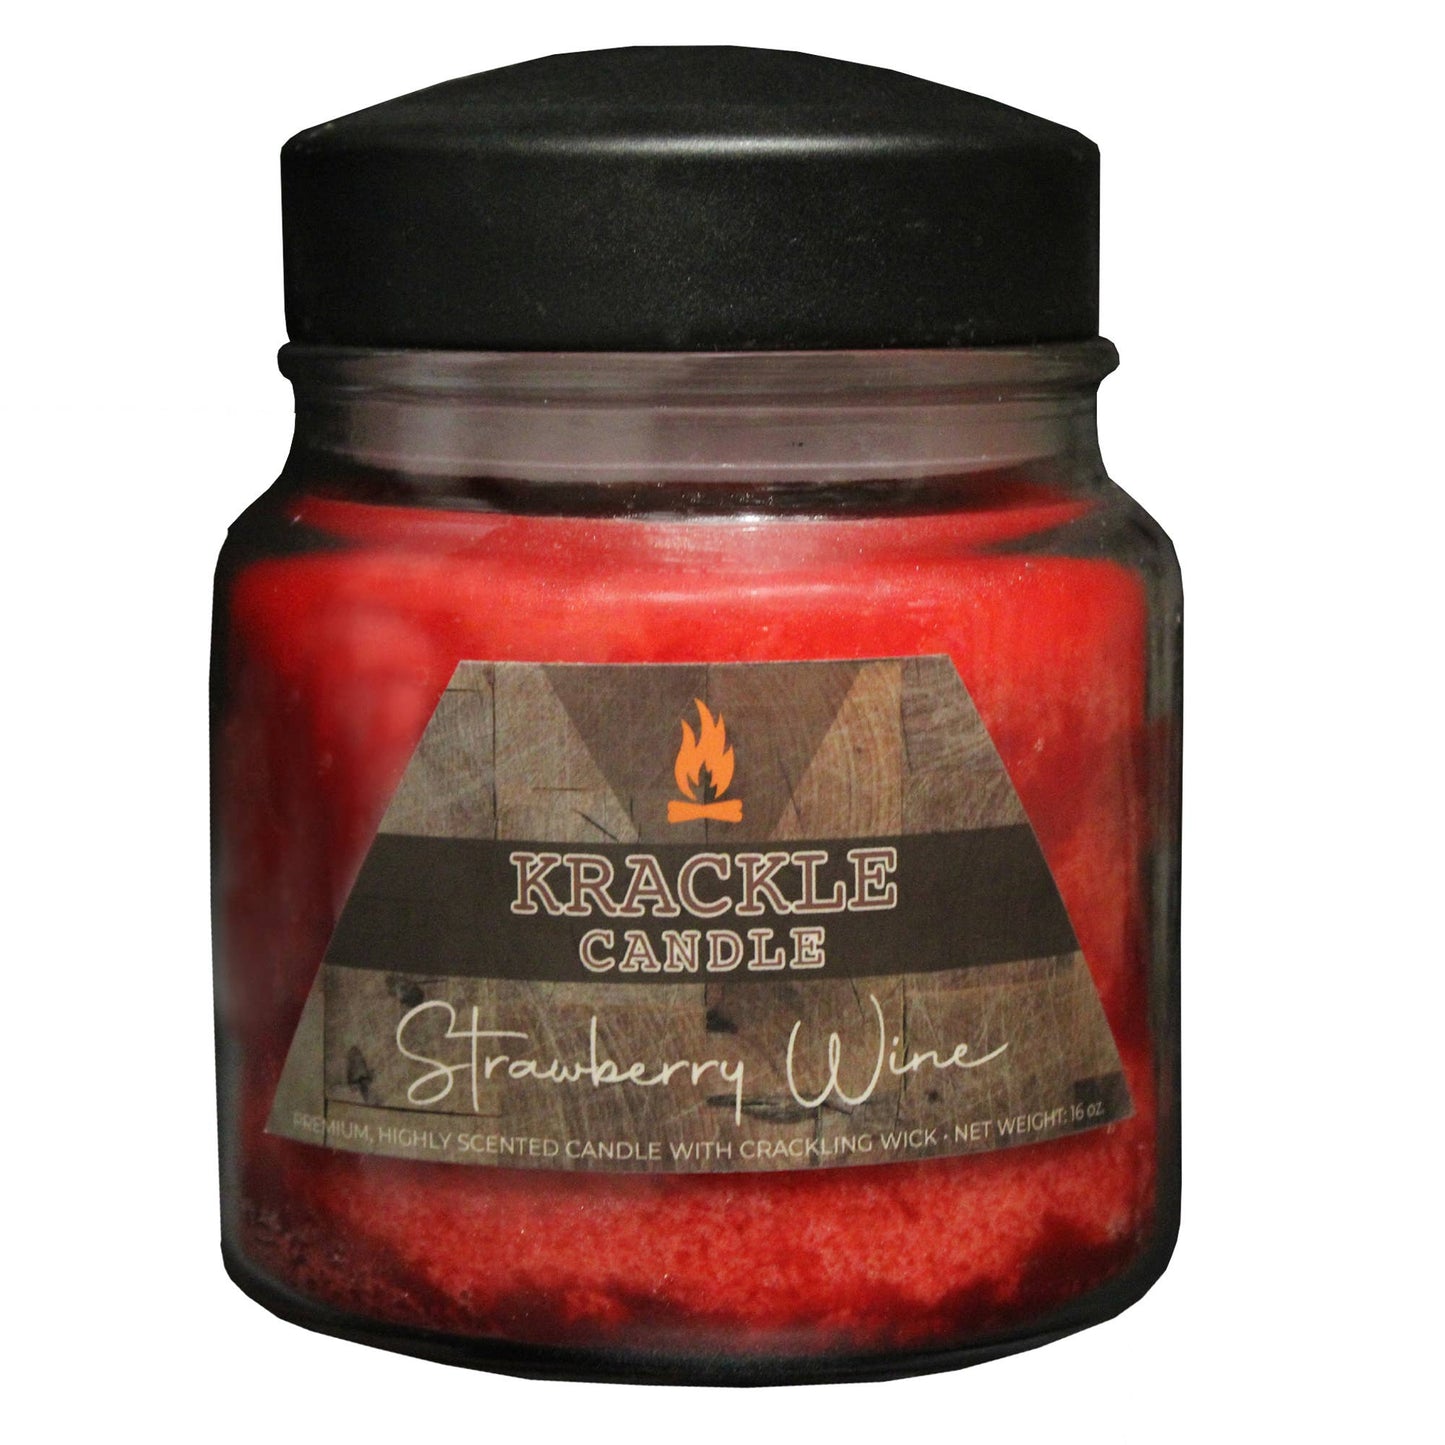 Strawberry Wine Krackle Candle